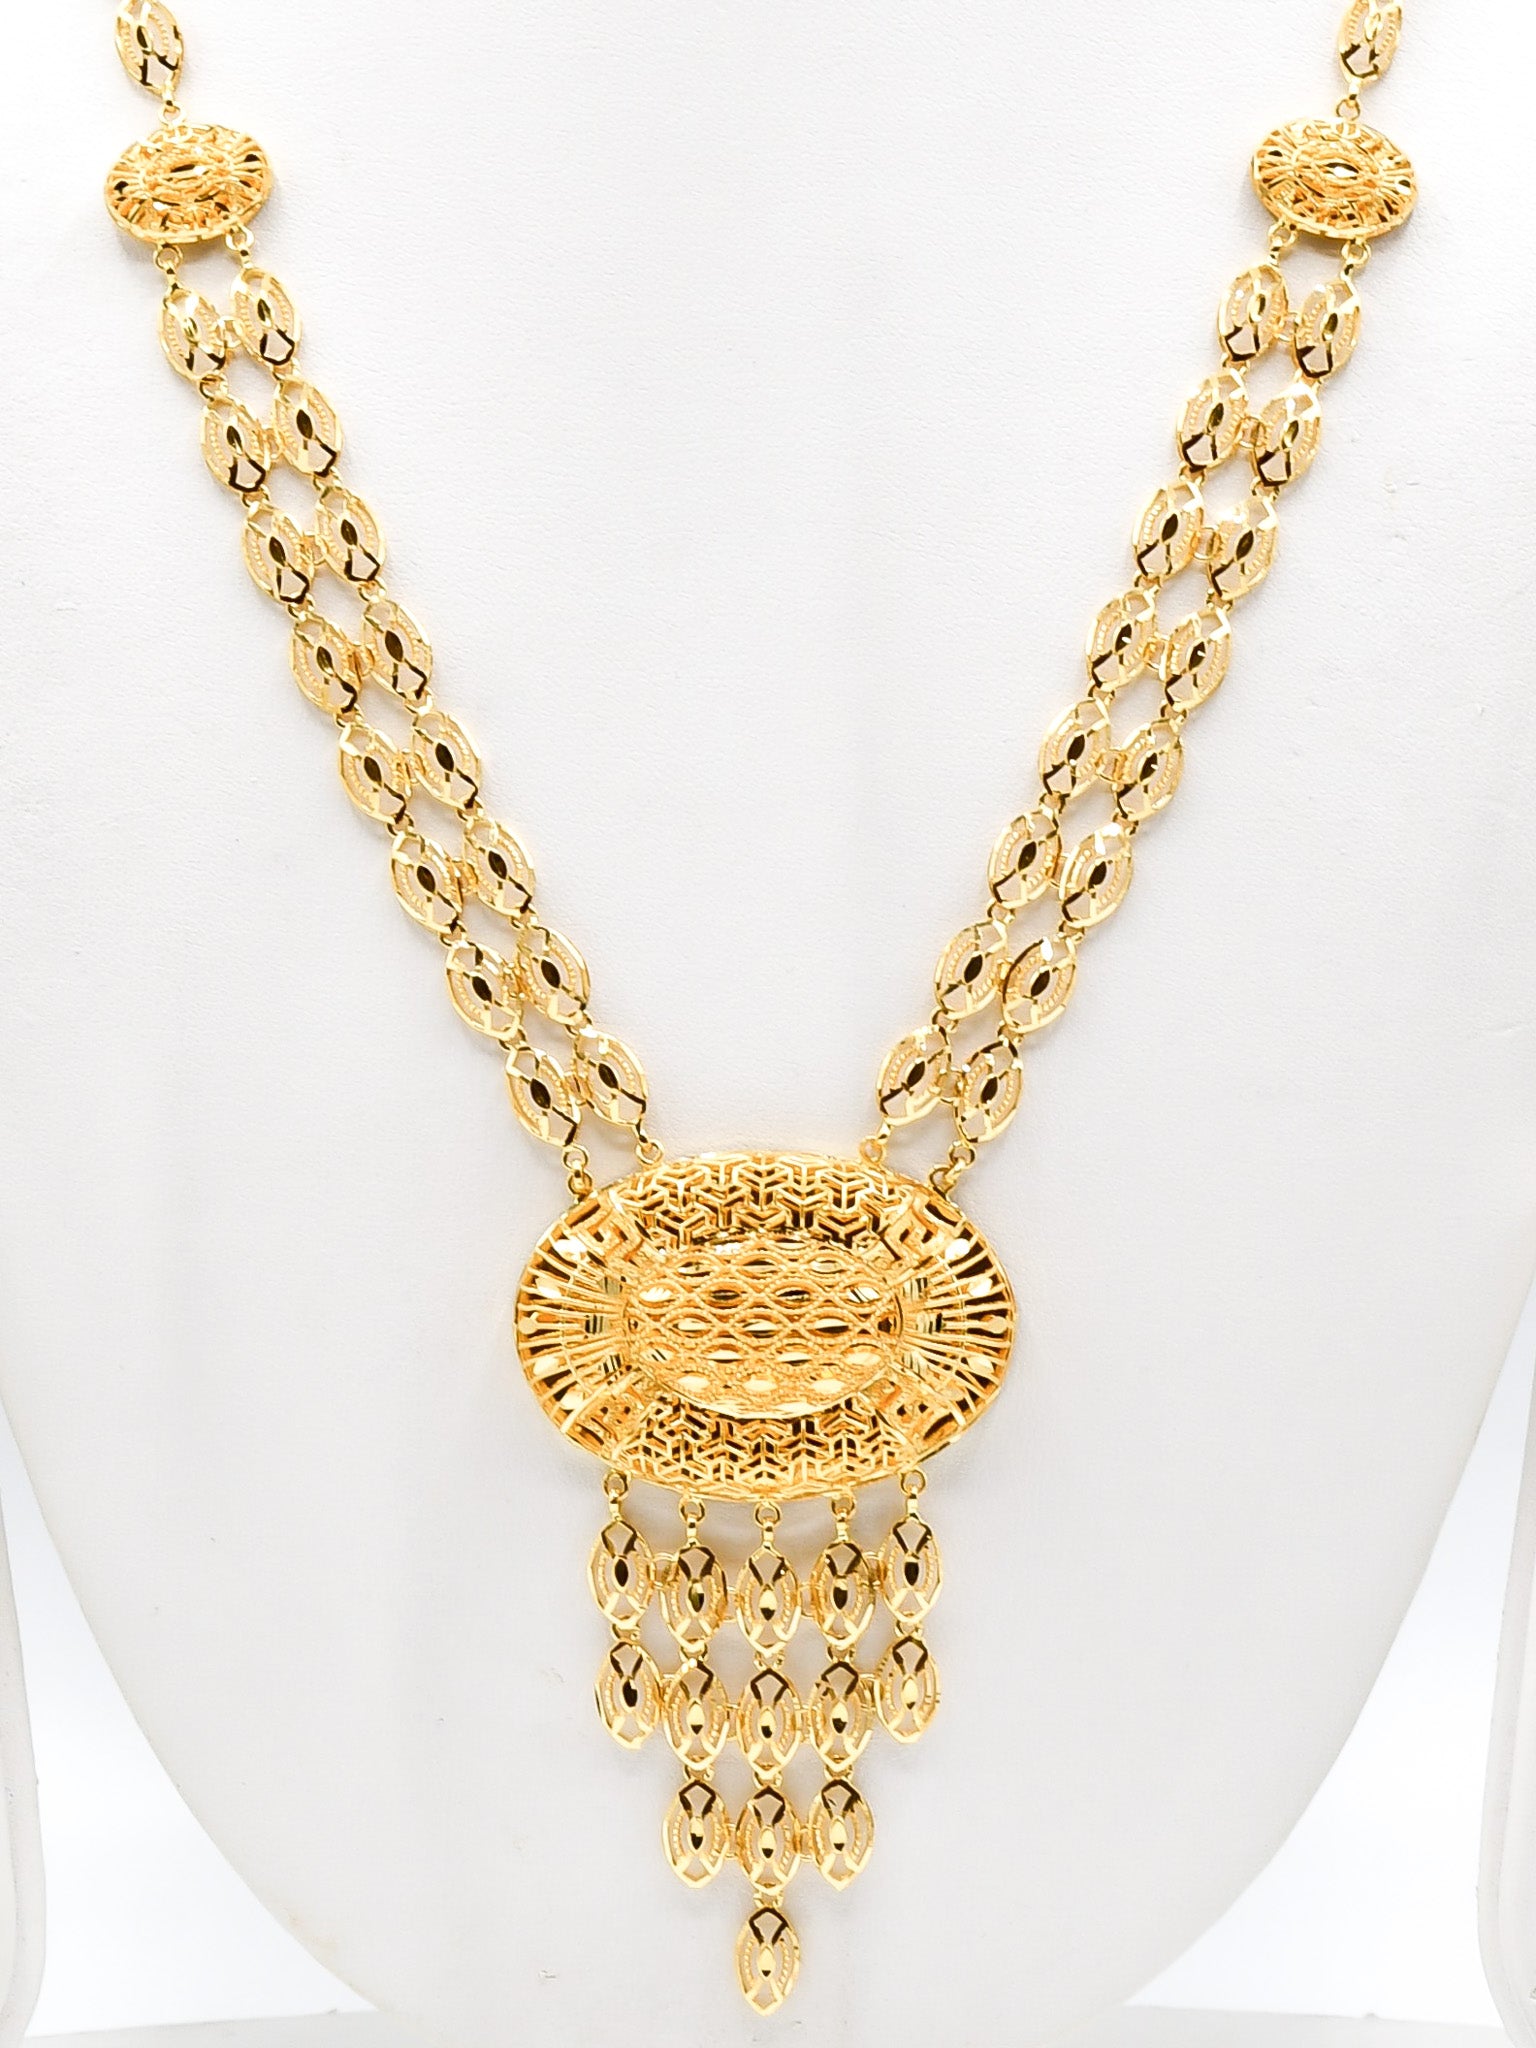 22ct Yellow Gold Necklace 52cm 16.43G | 002300738572 | Cash Converters